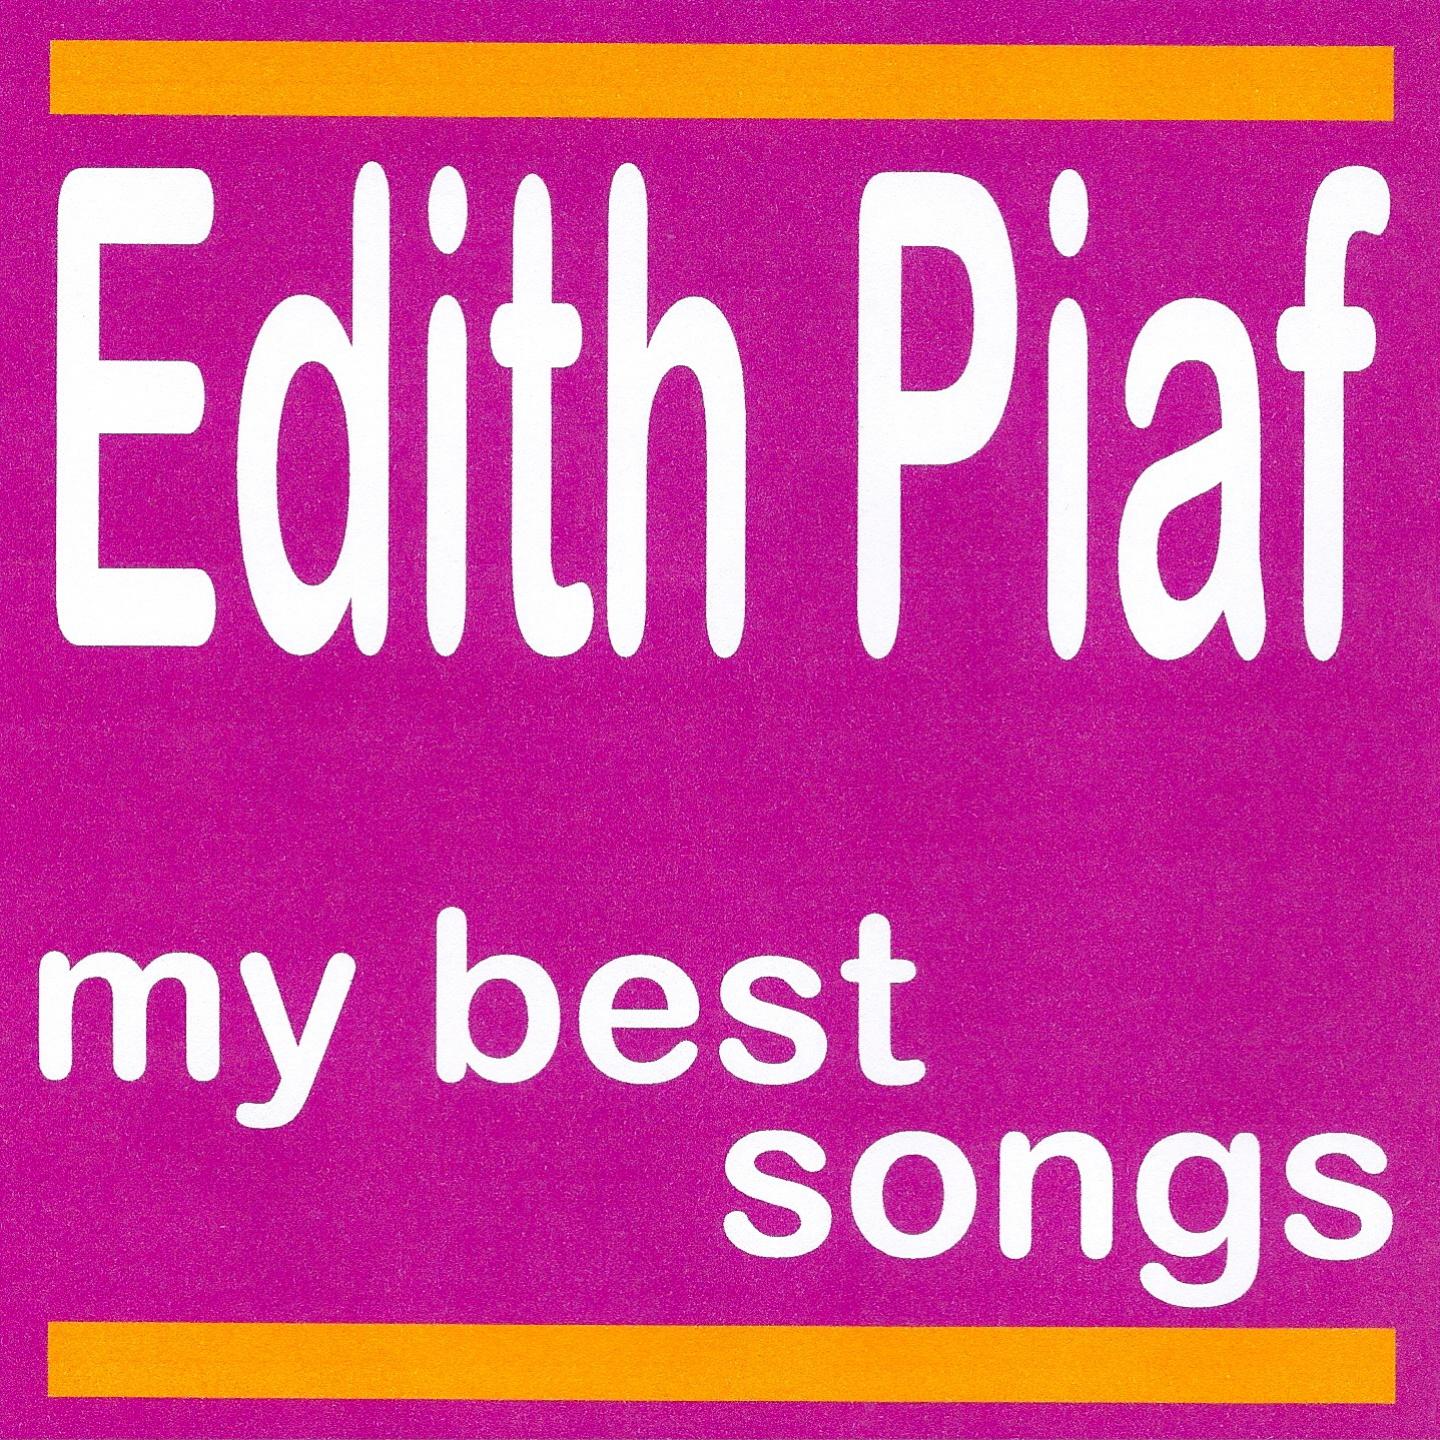 My best songs - edith piaf